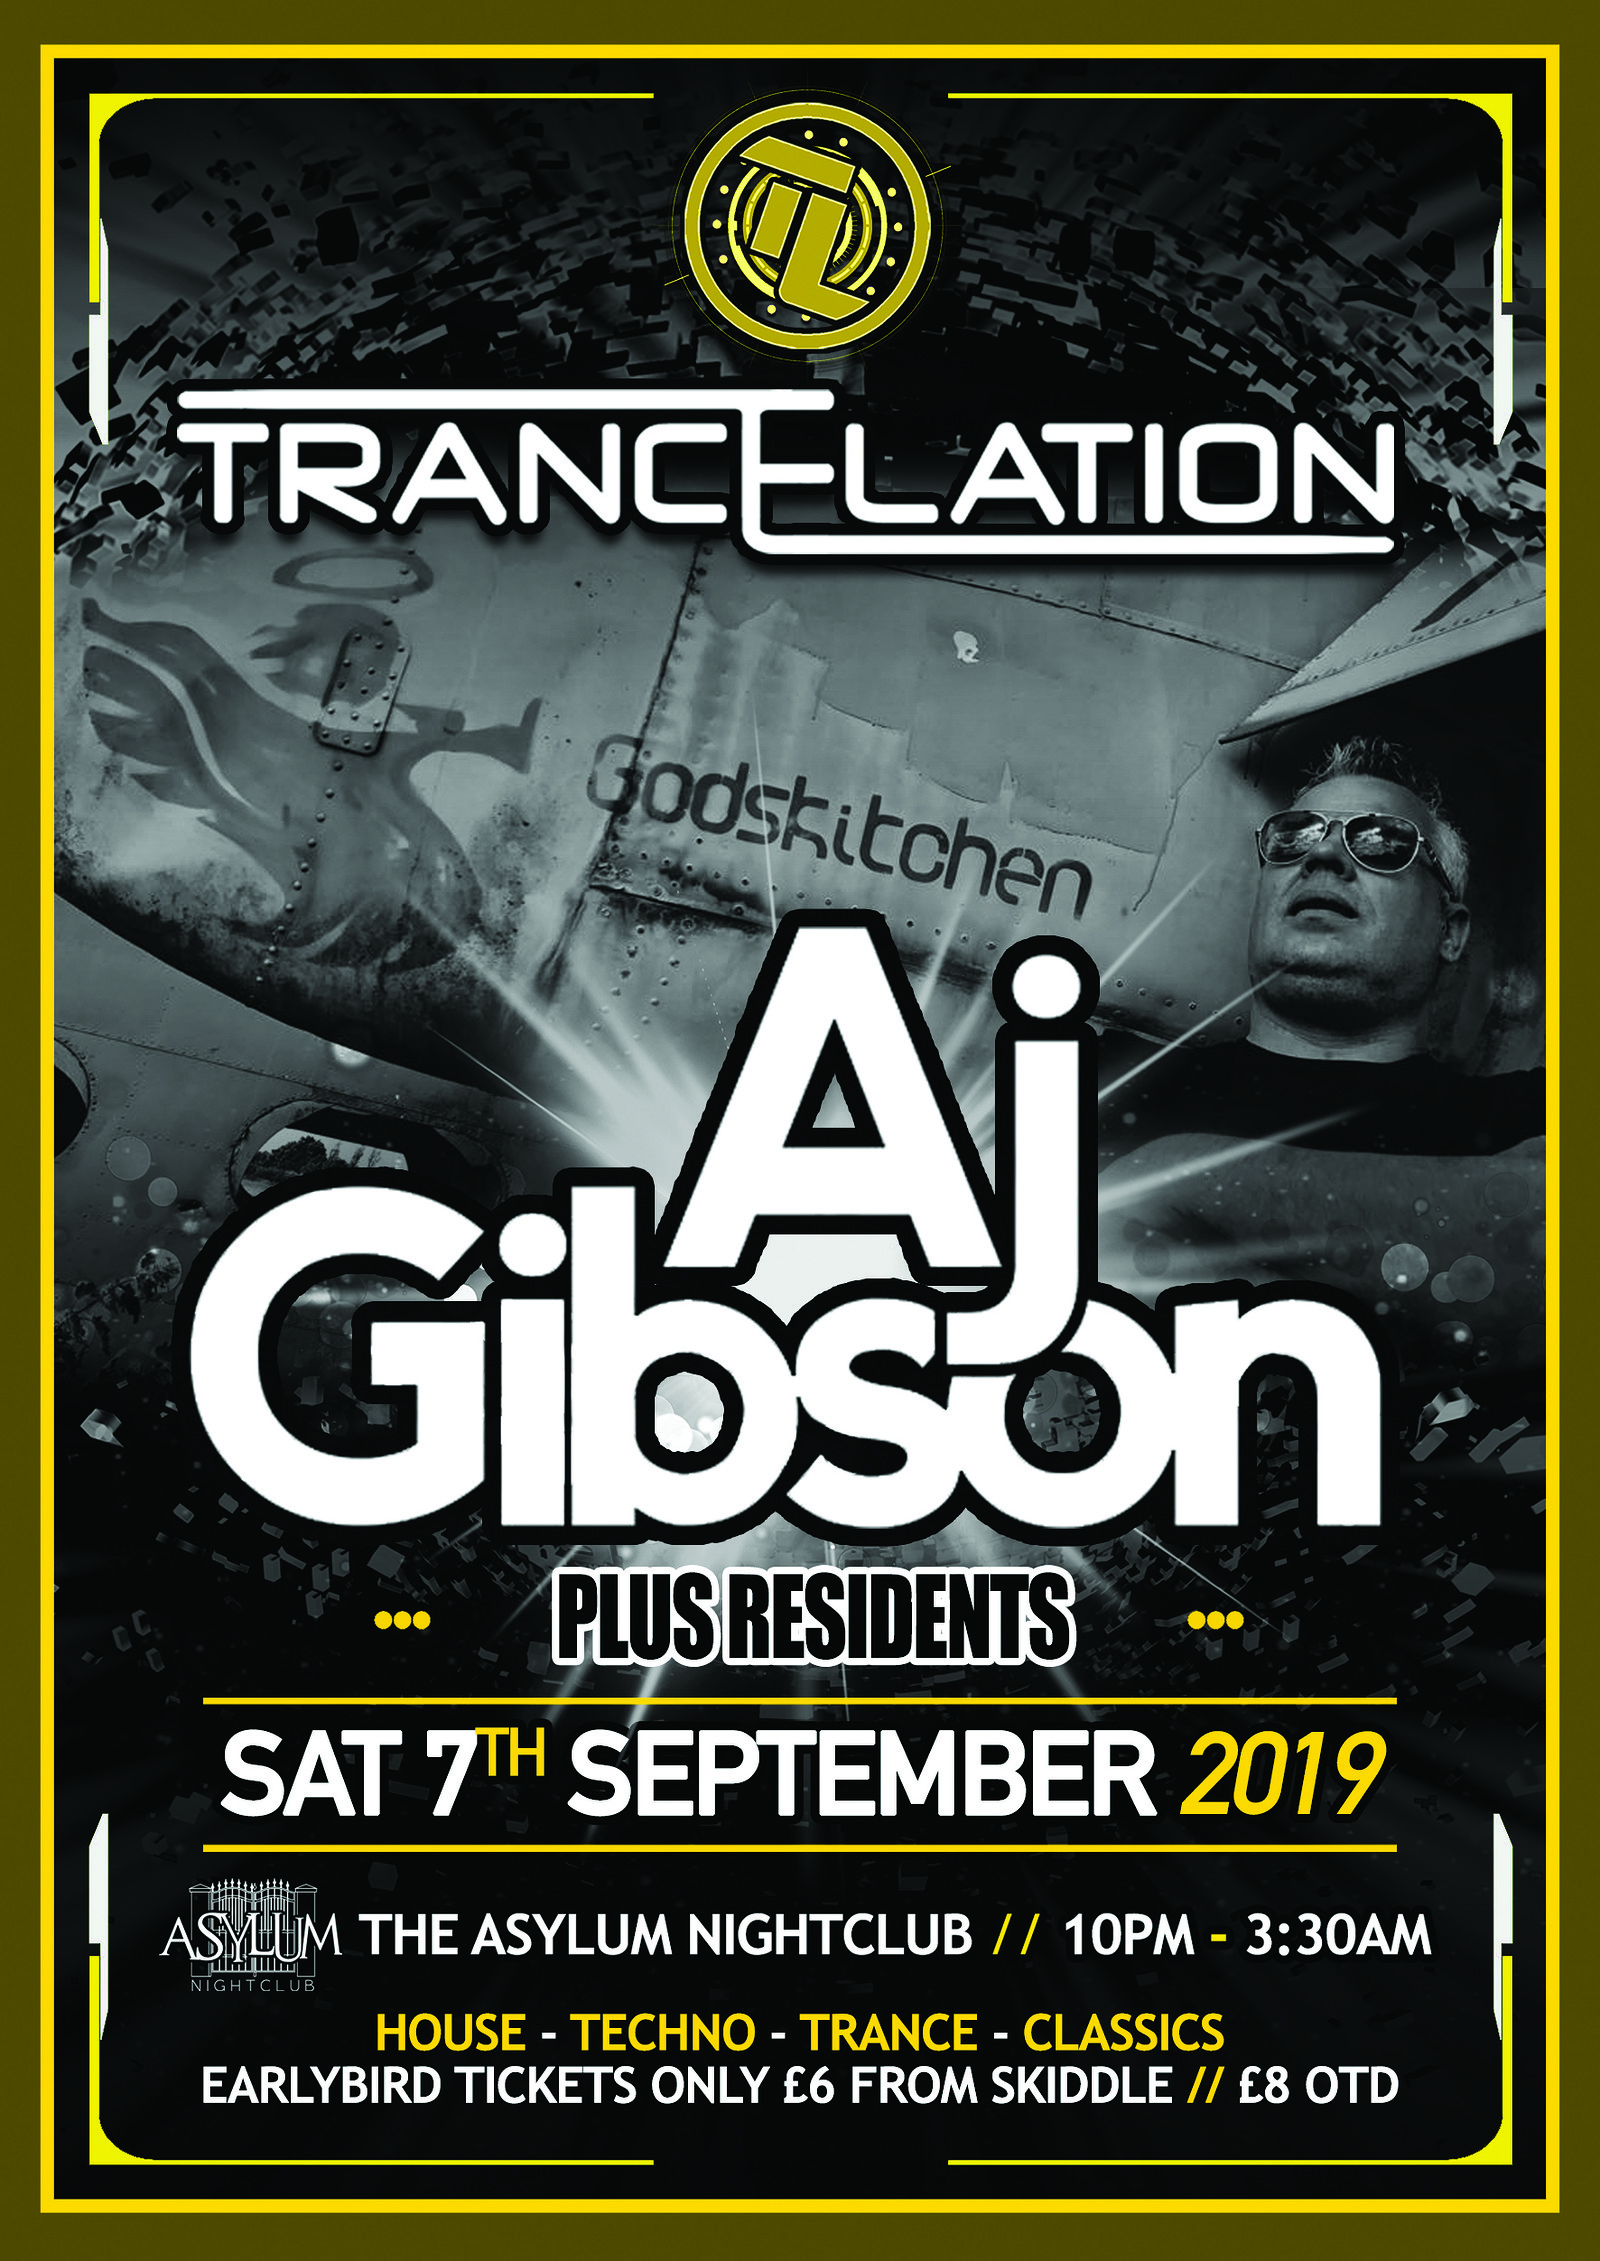 Trancelation Presents: AJ Gibson at Asylum